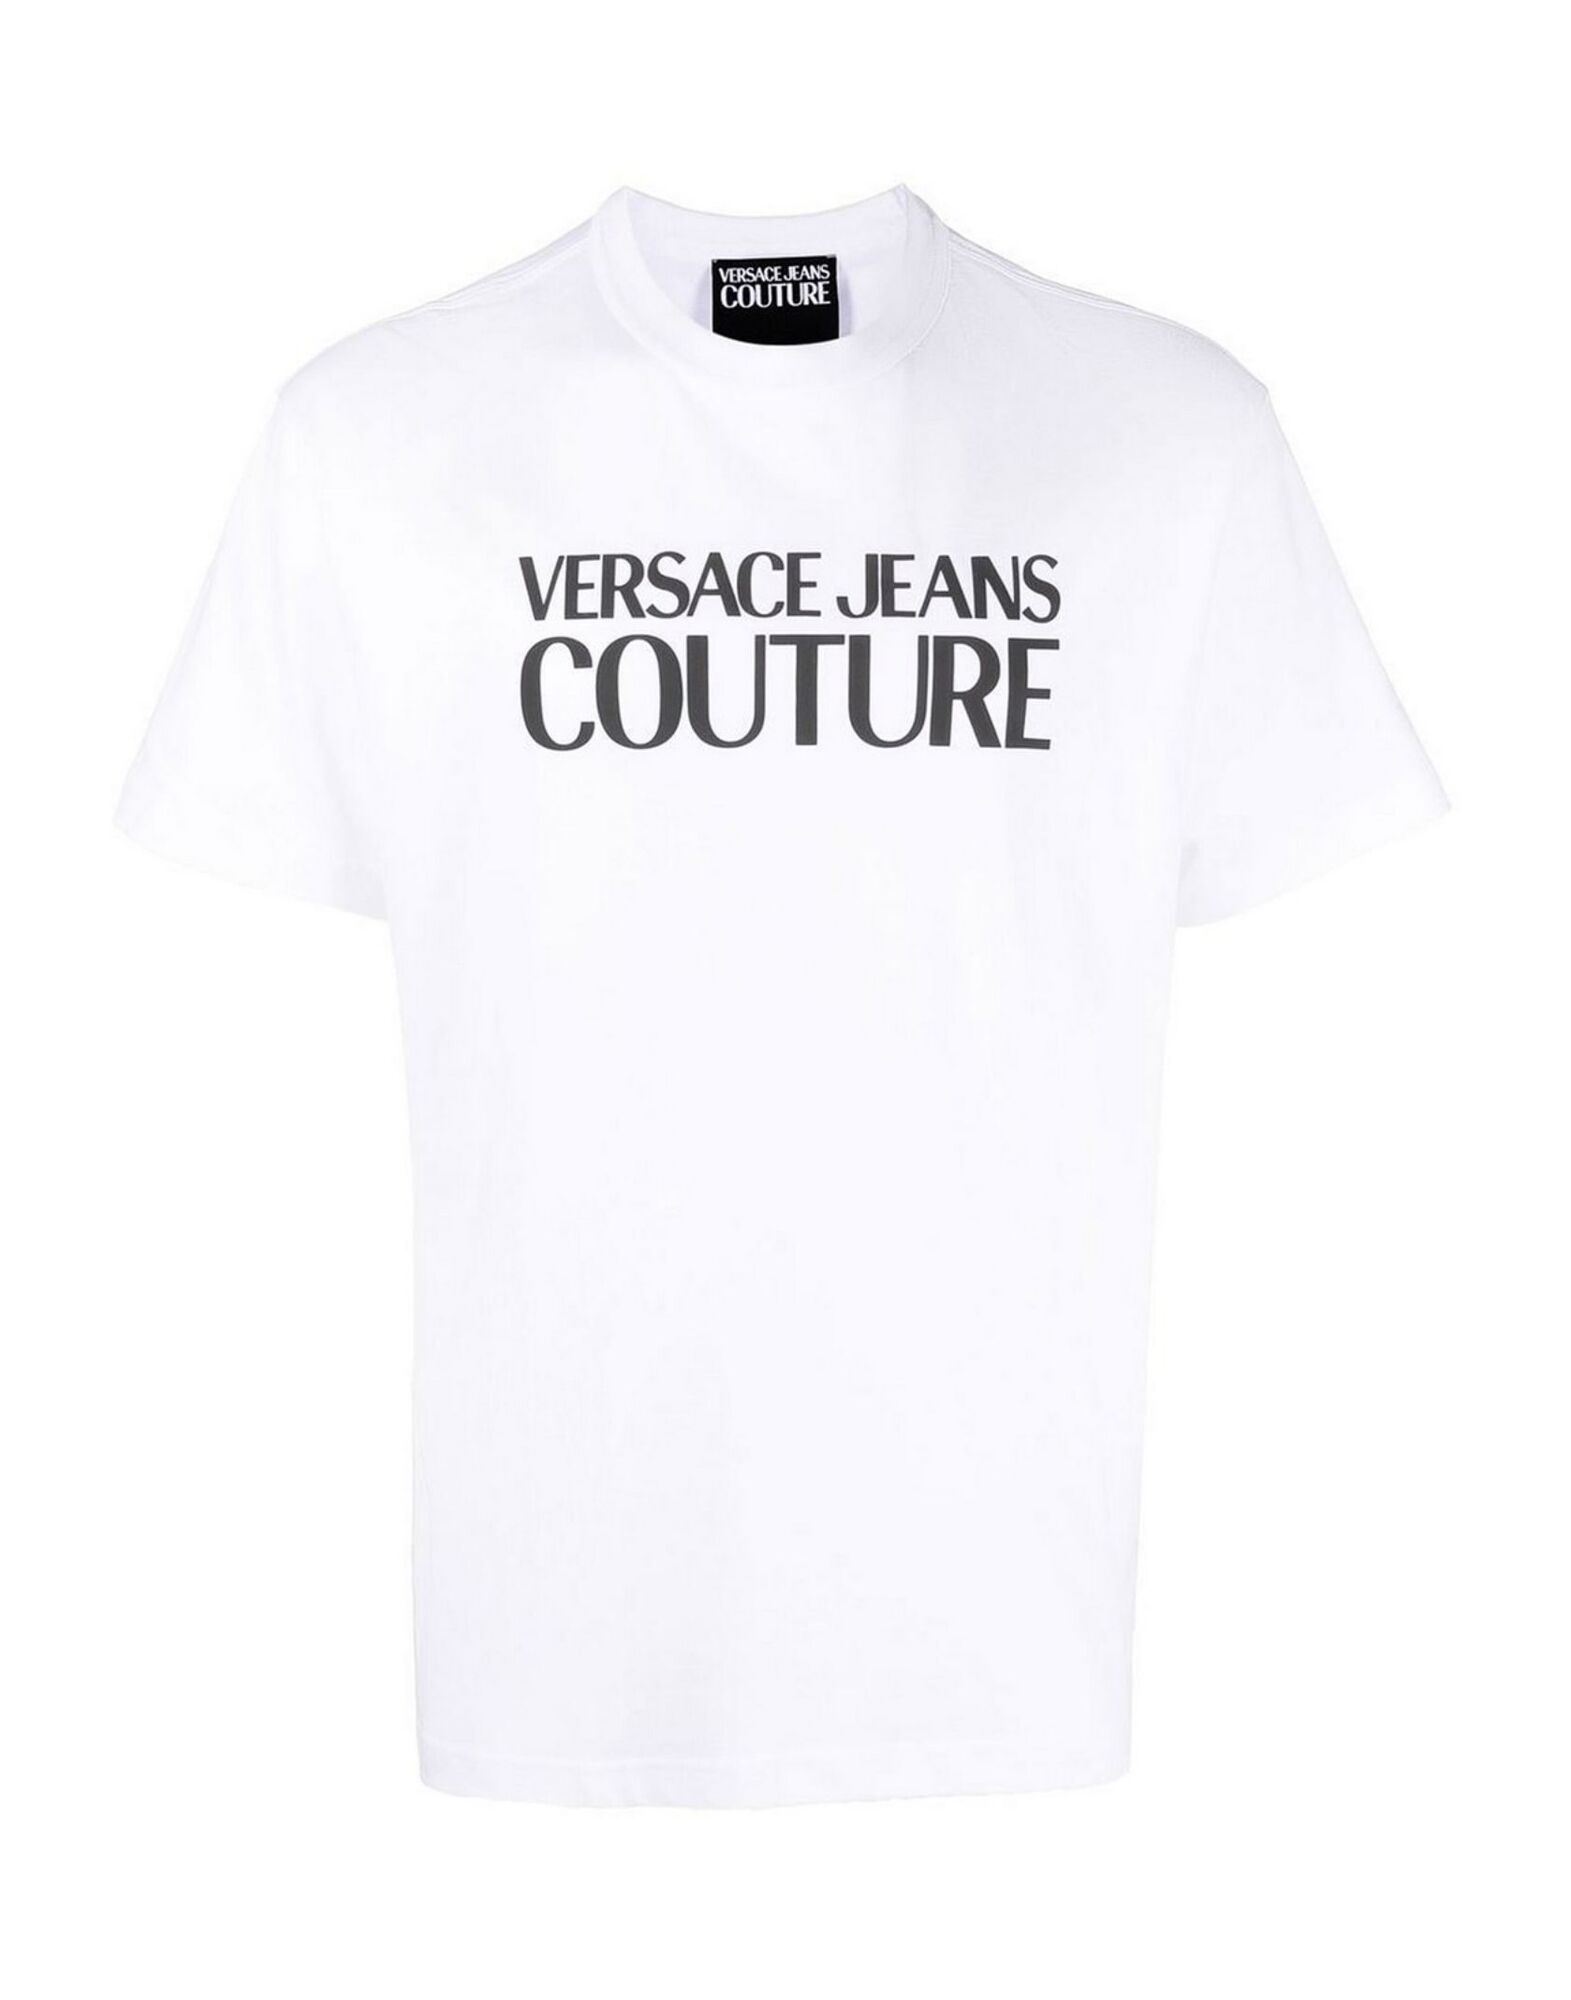 VERSACE JEANS COUTURE T-shirts Herren Weiß von VERSACE JEANS COUTURE